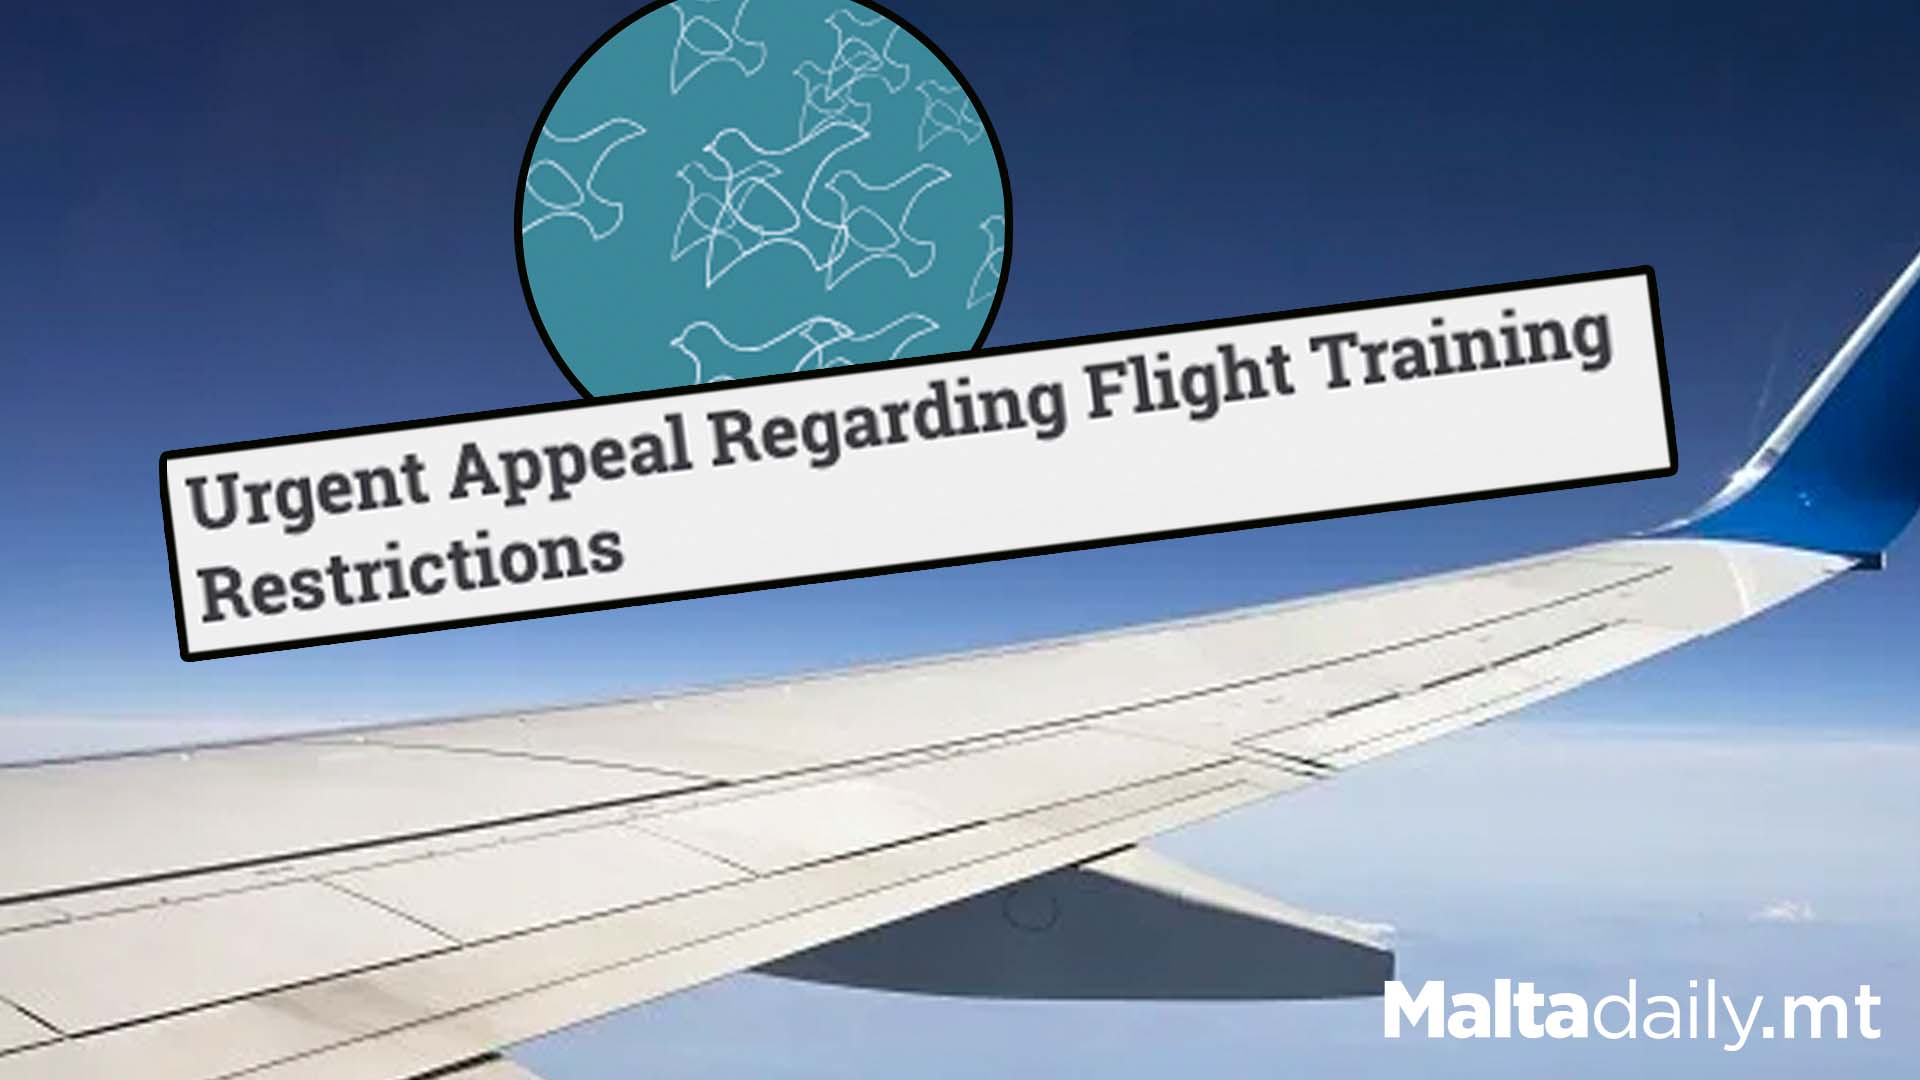 Student Pilots Start Petition To Combat Flight Training Restrictions